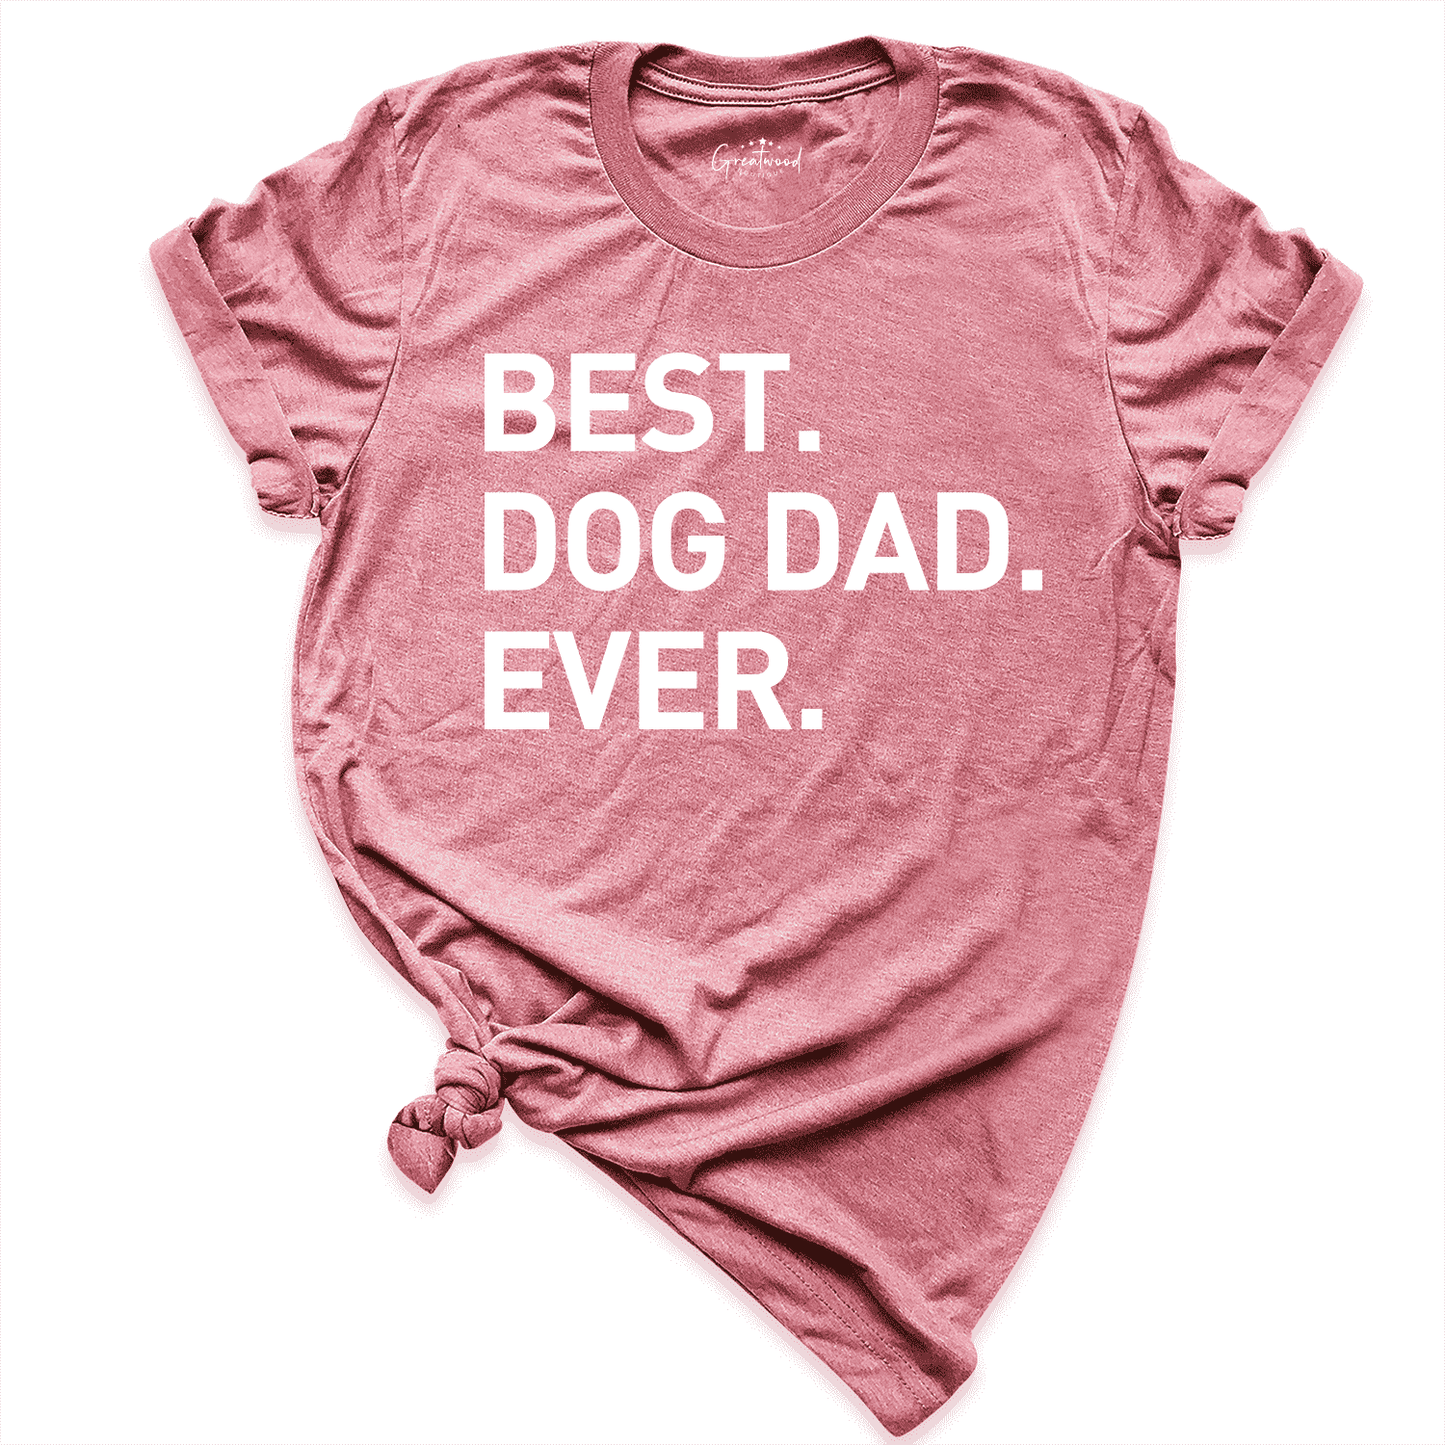 Best Dog Dad Ever Shirt mauve - greatwood boutique